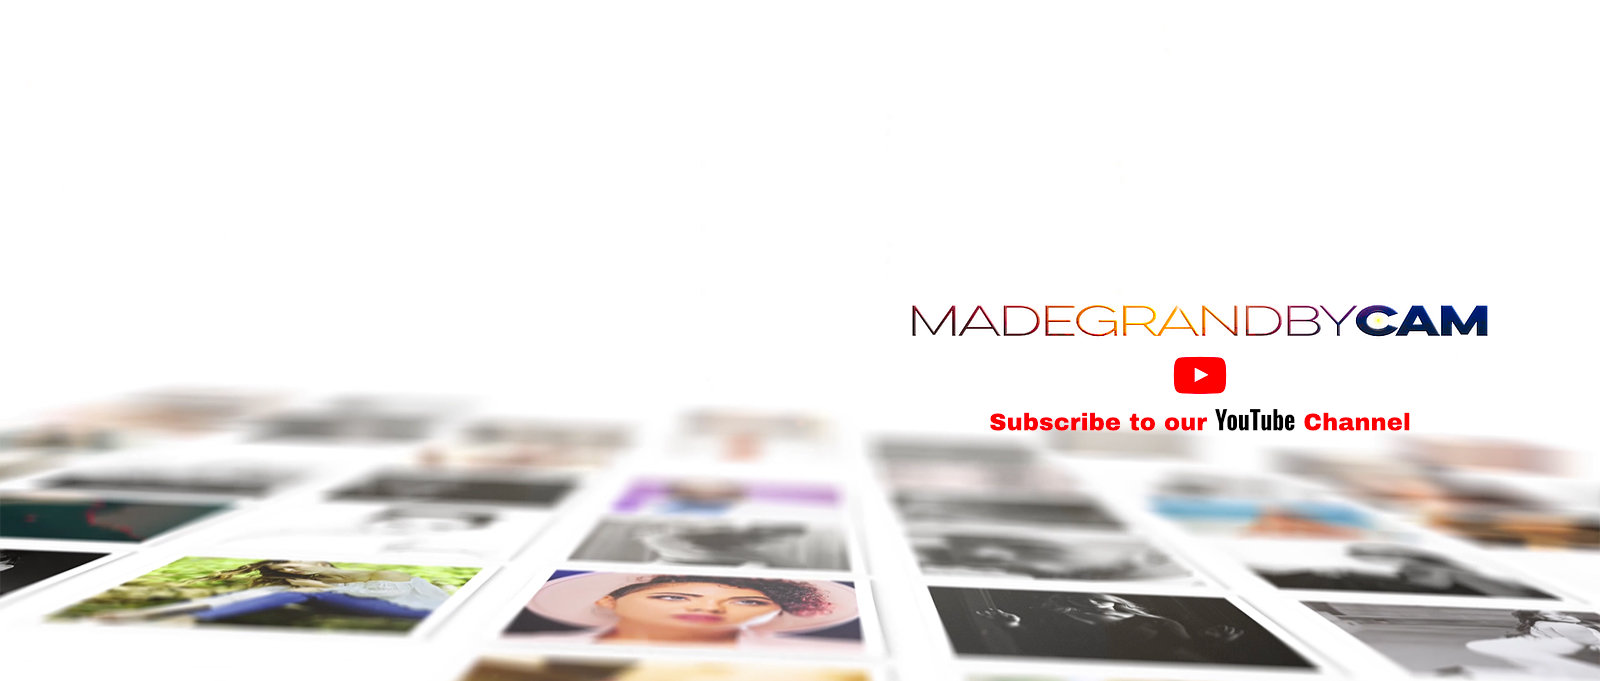 Subscribe MADEGRANDBYCAM on YouTube. Contact MADEGRANDBYCAM